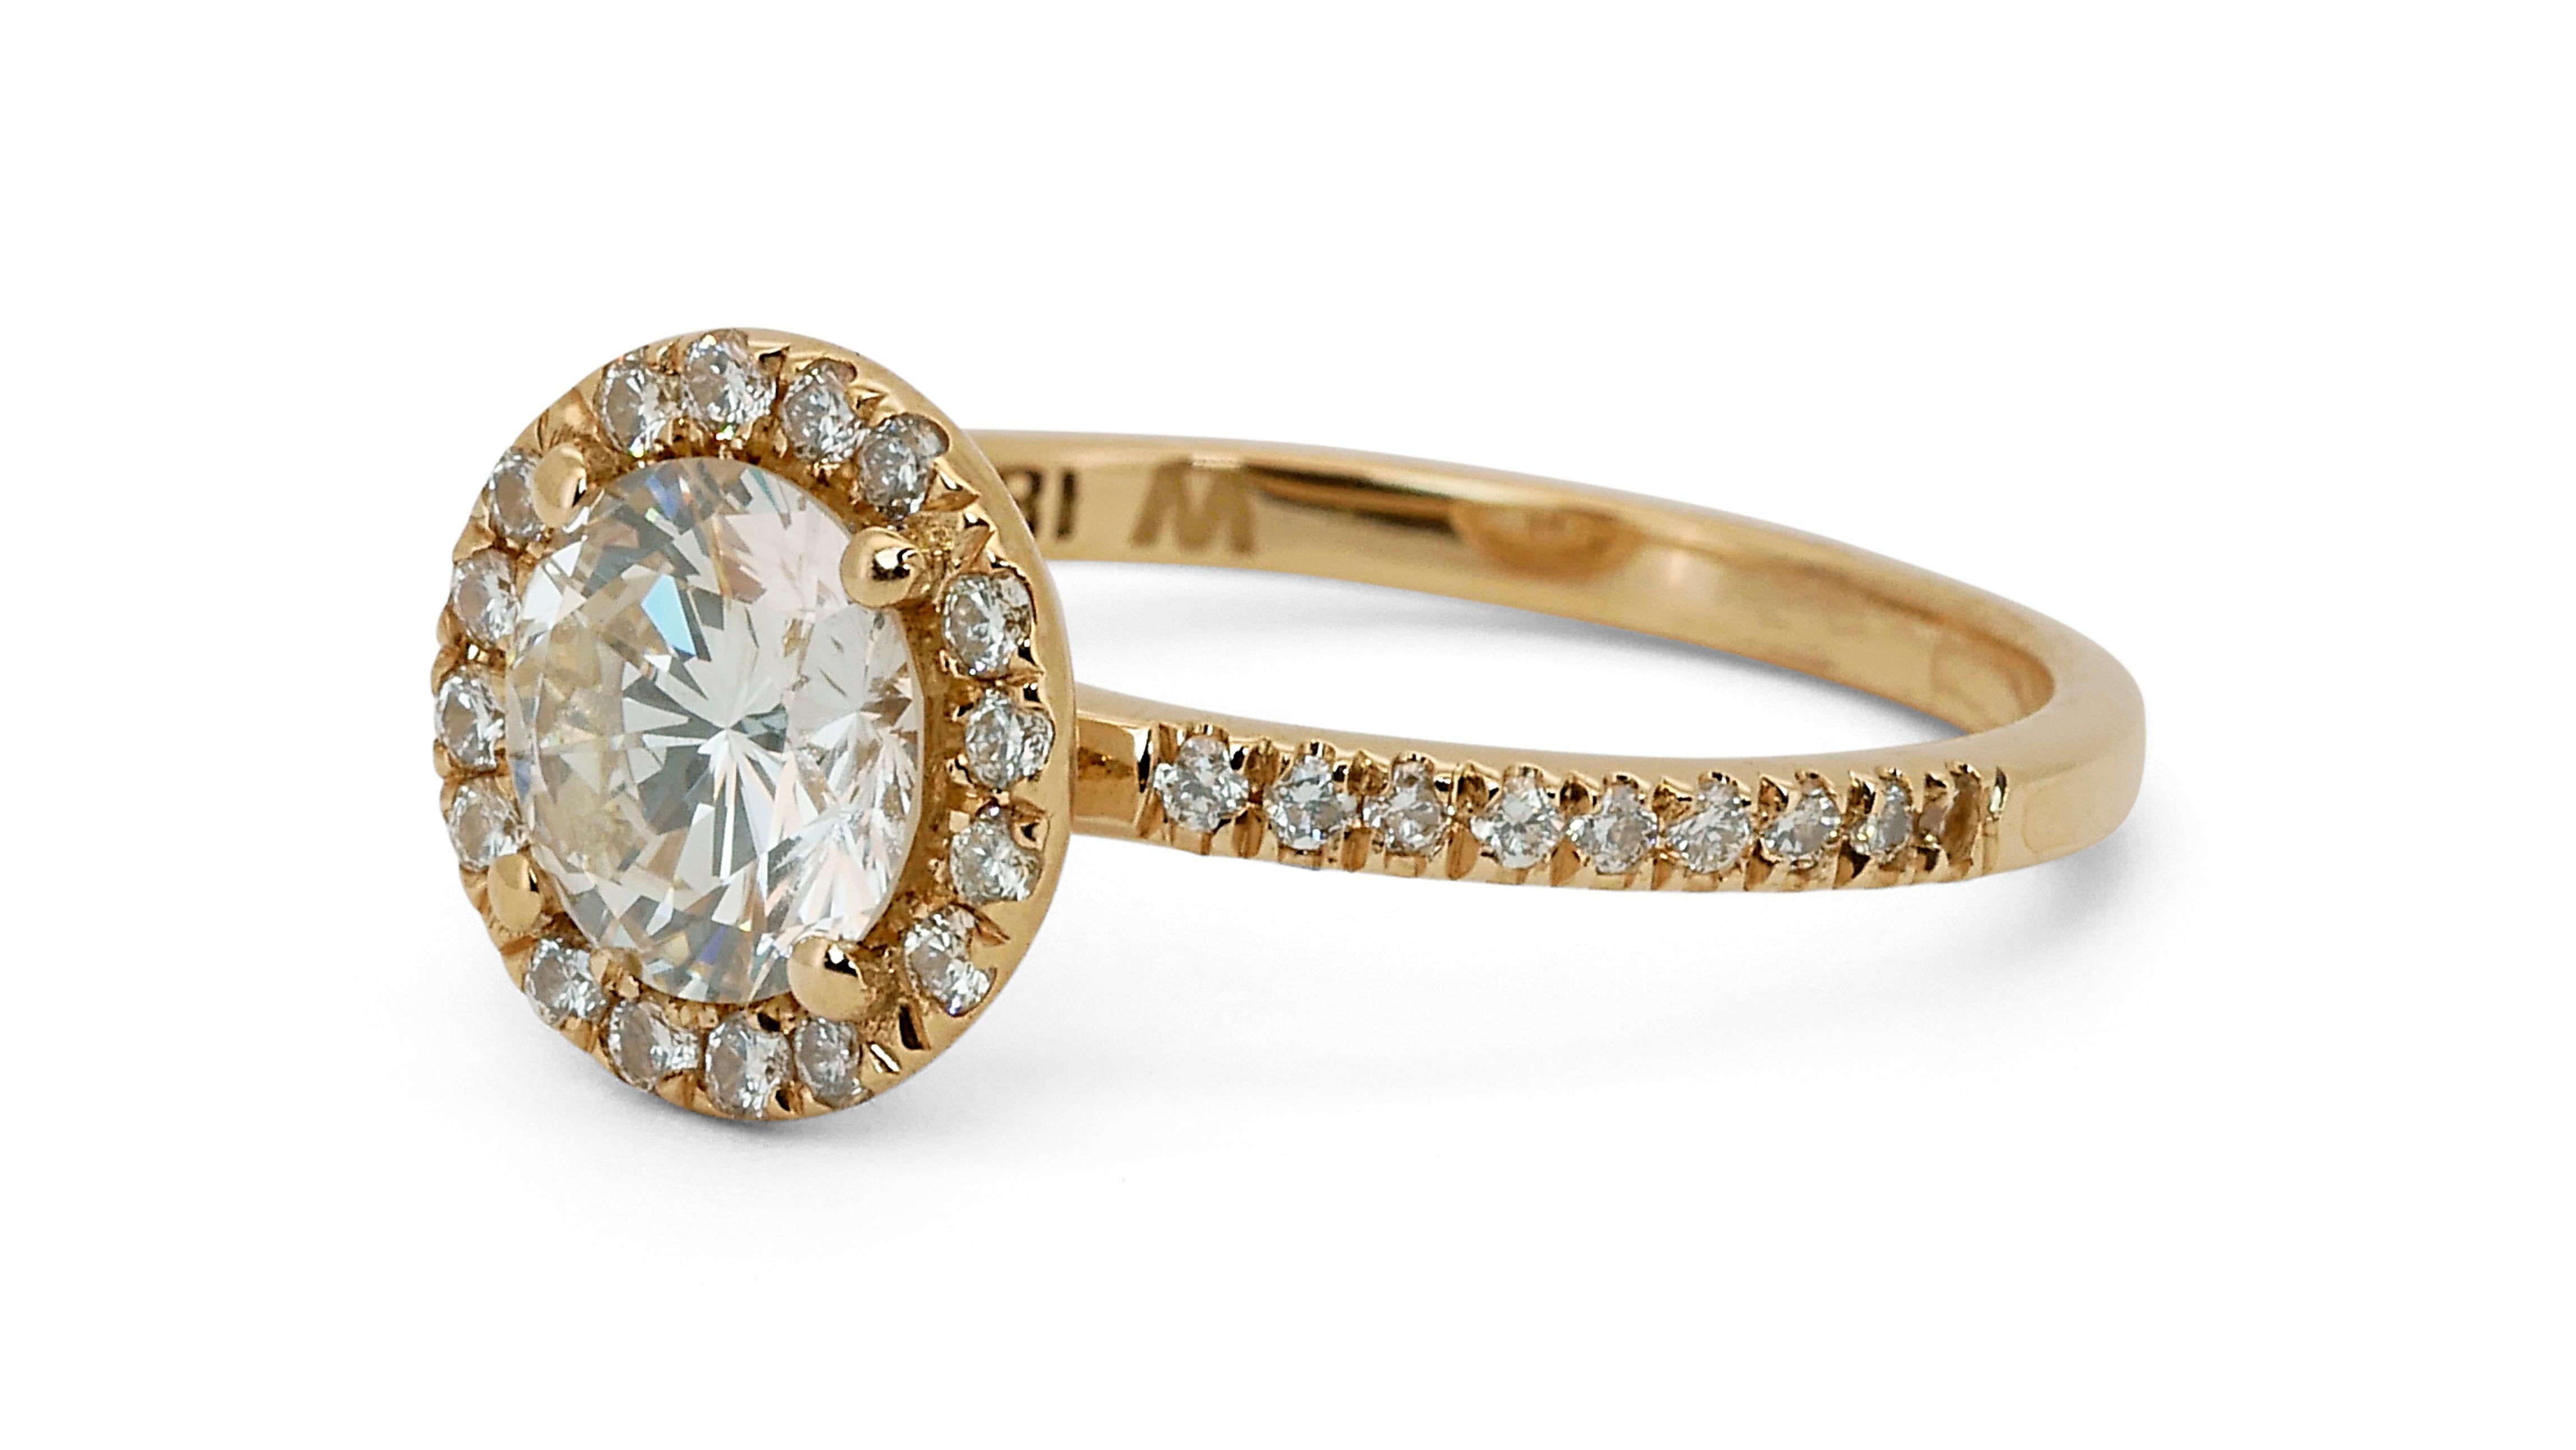 Women's Stunning 18k Yellow Gold Halo Ring with 1.35 Natural Diamonds IGI Certificate